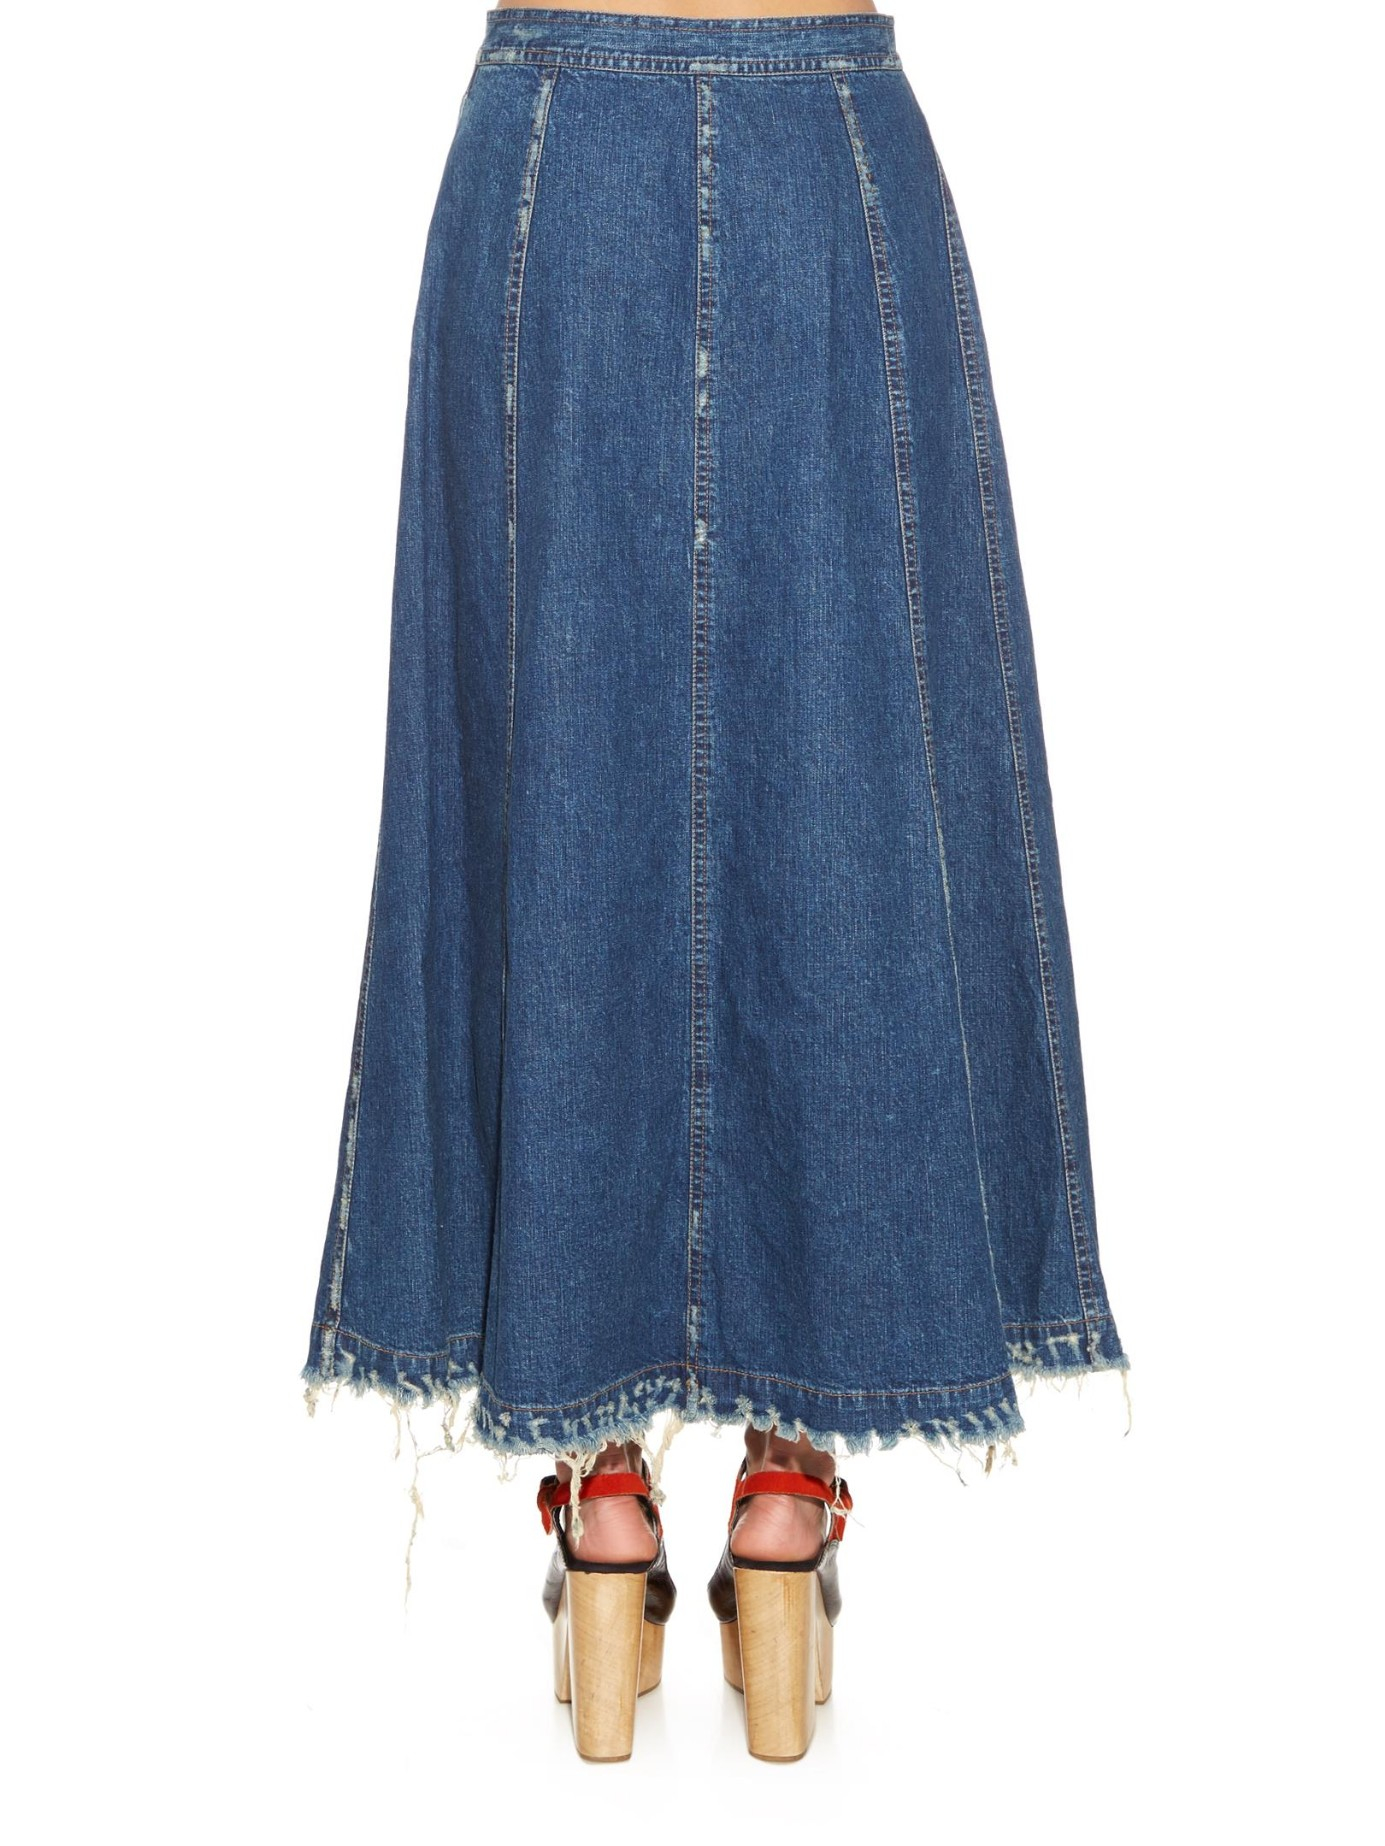 Lyst - Rachel Comey 'Gore' Denim Skirt in Blue